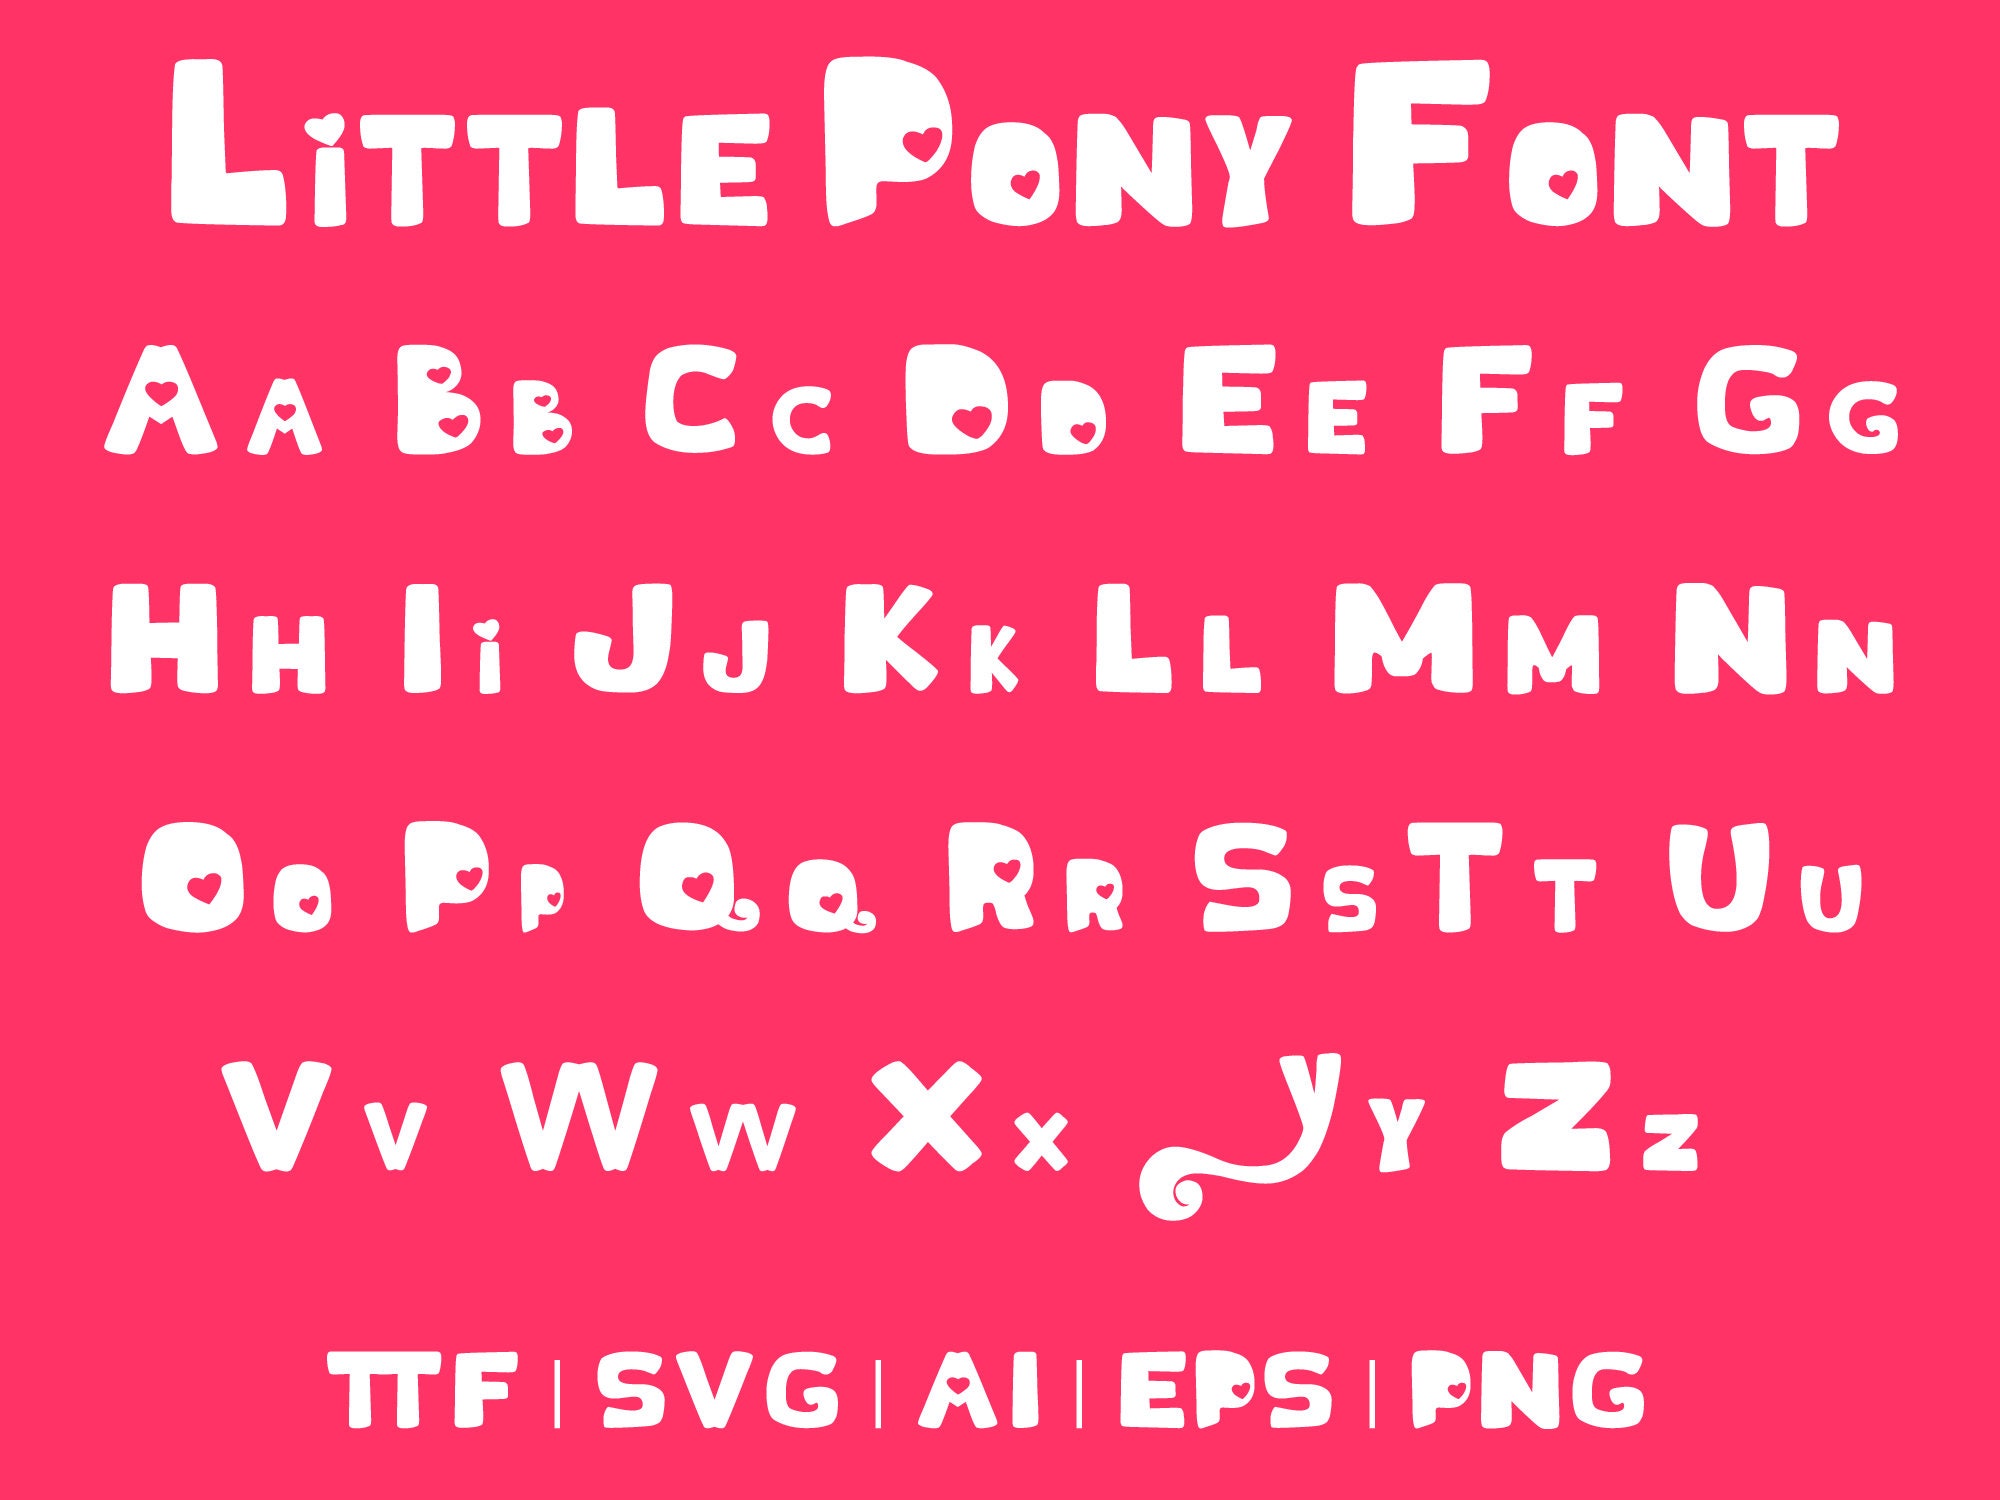 My little pony font